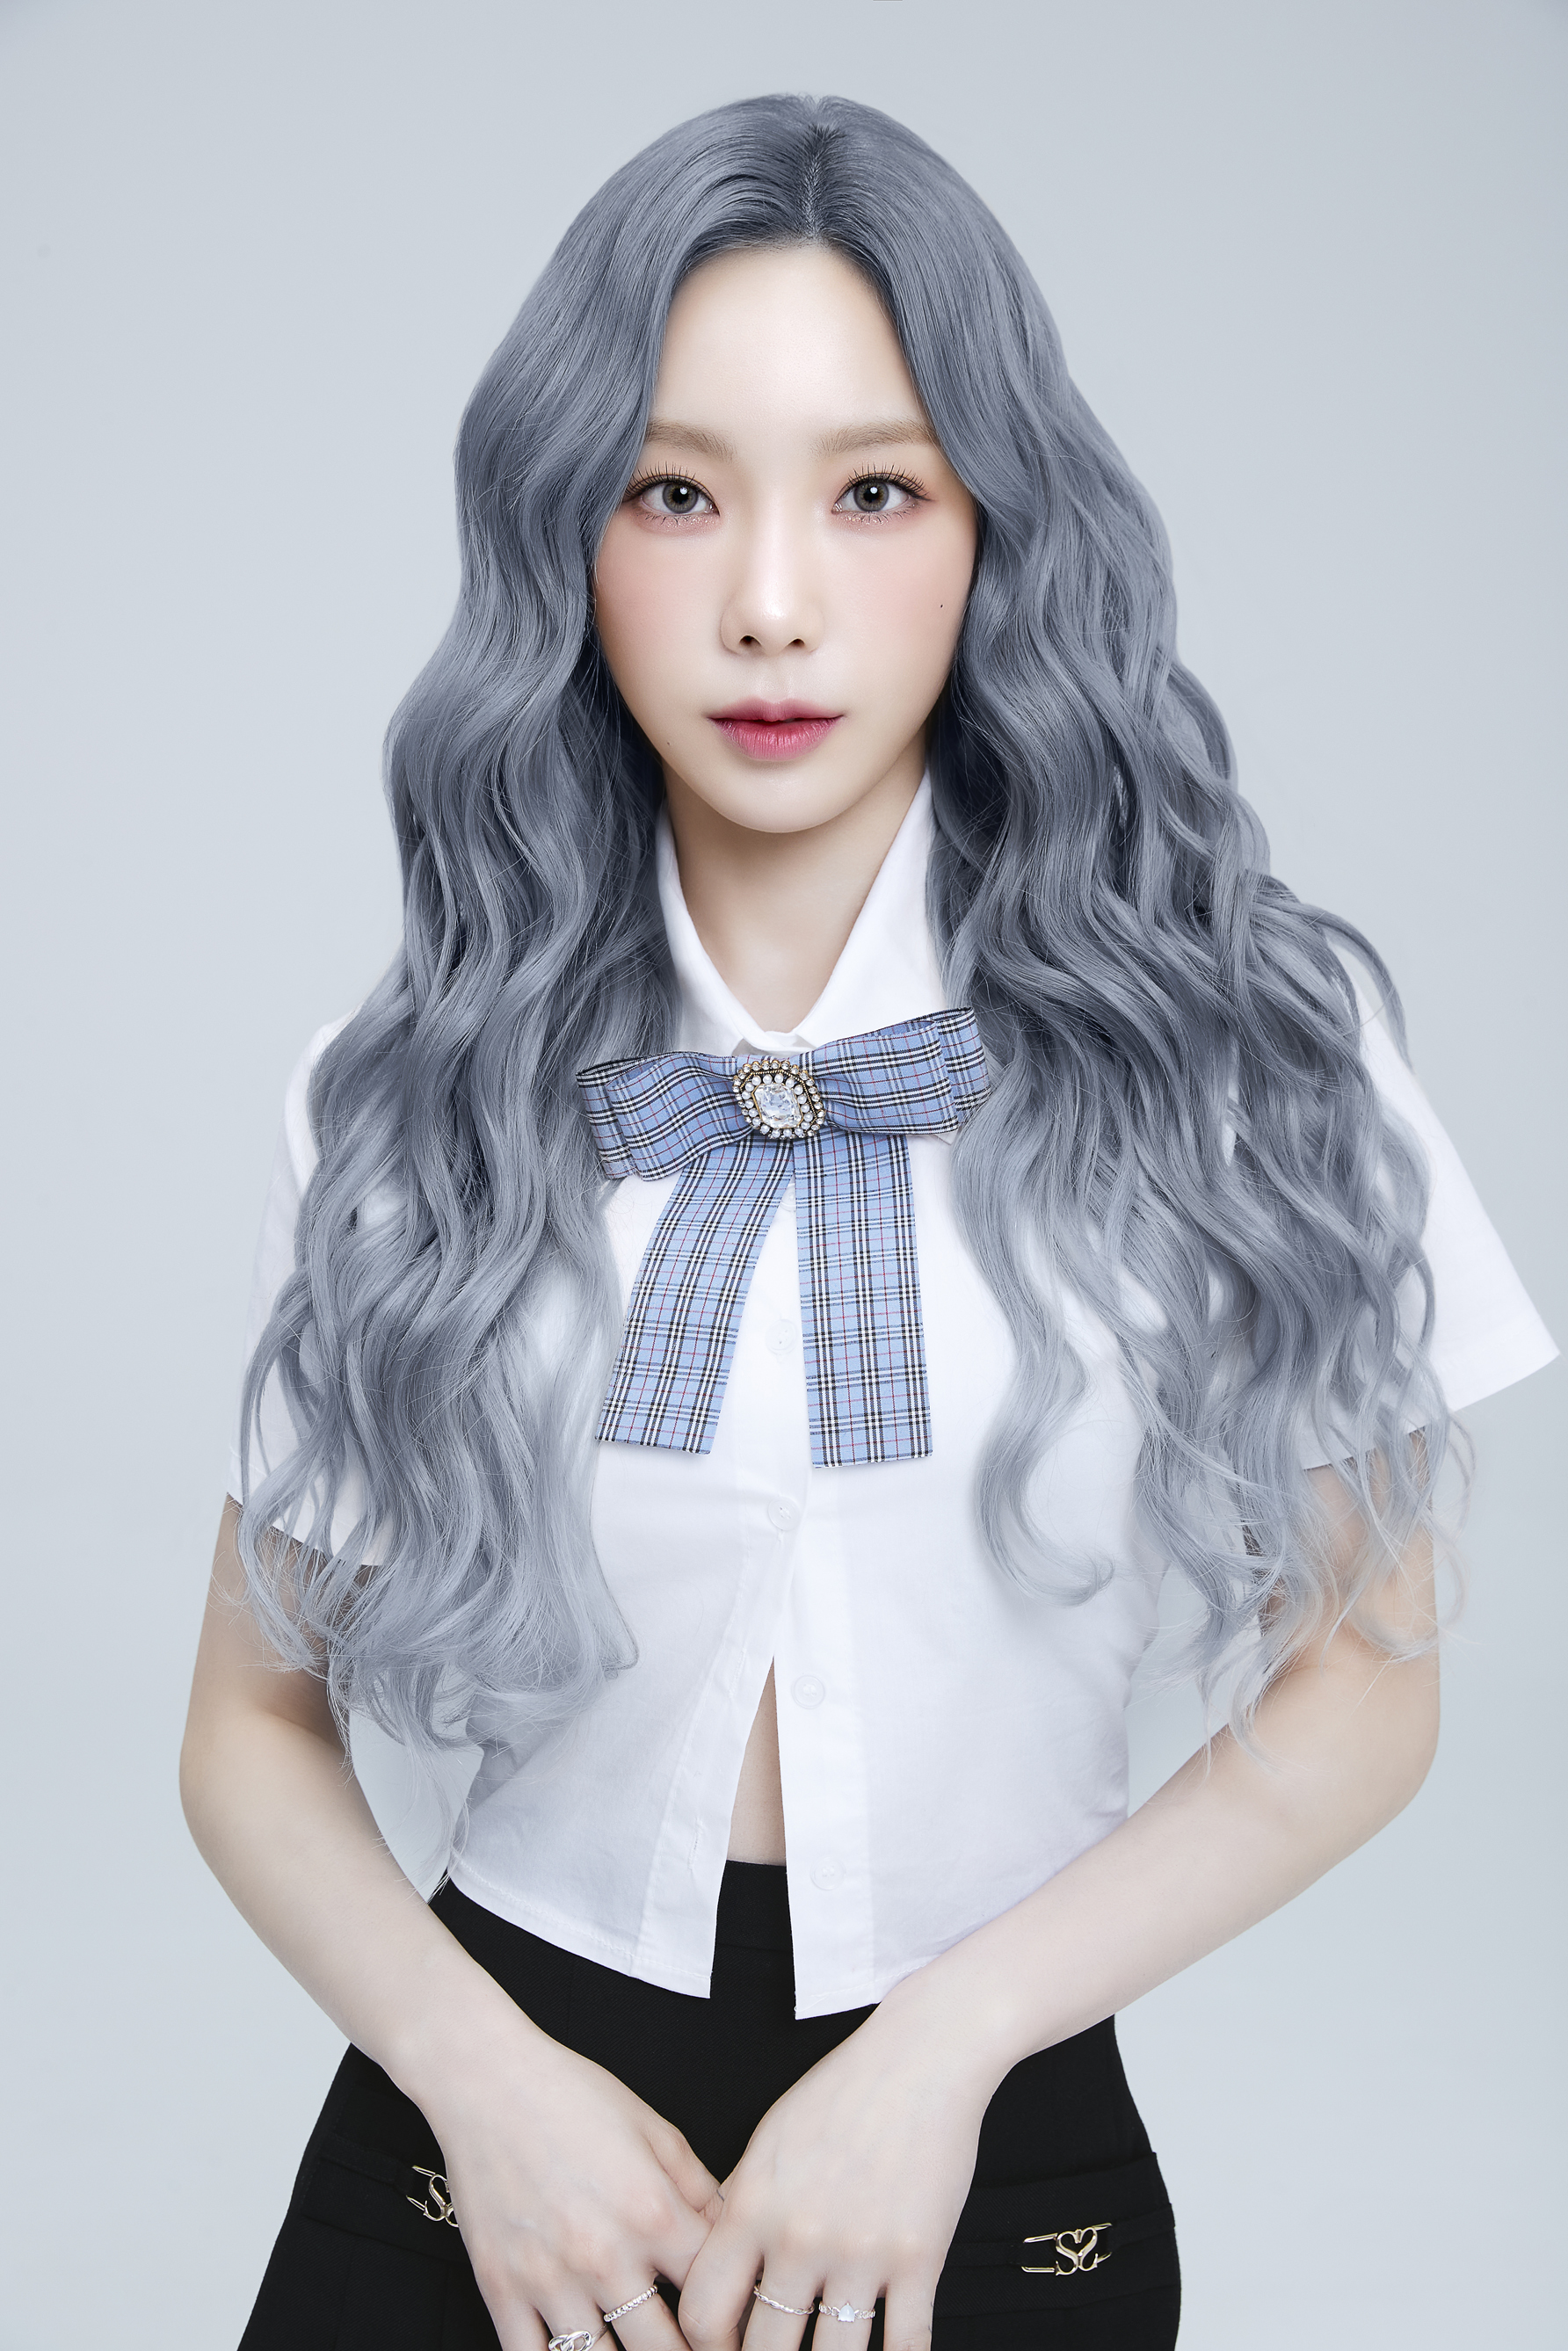 K Pop Kim Taeyeon SNSD Taeyeon Korean Women Model Singer Gray Hair Dyed Hair Contact Lenses Asian 1784x2675